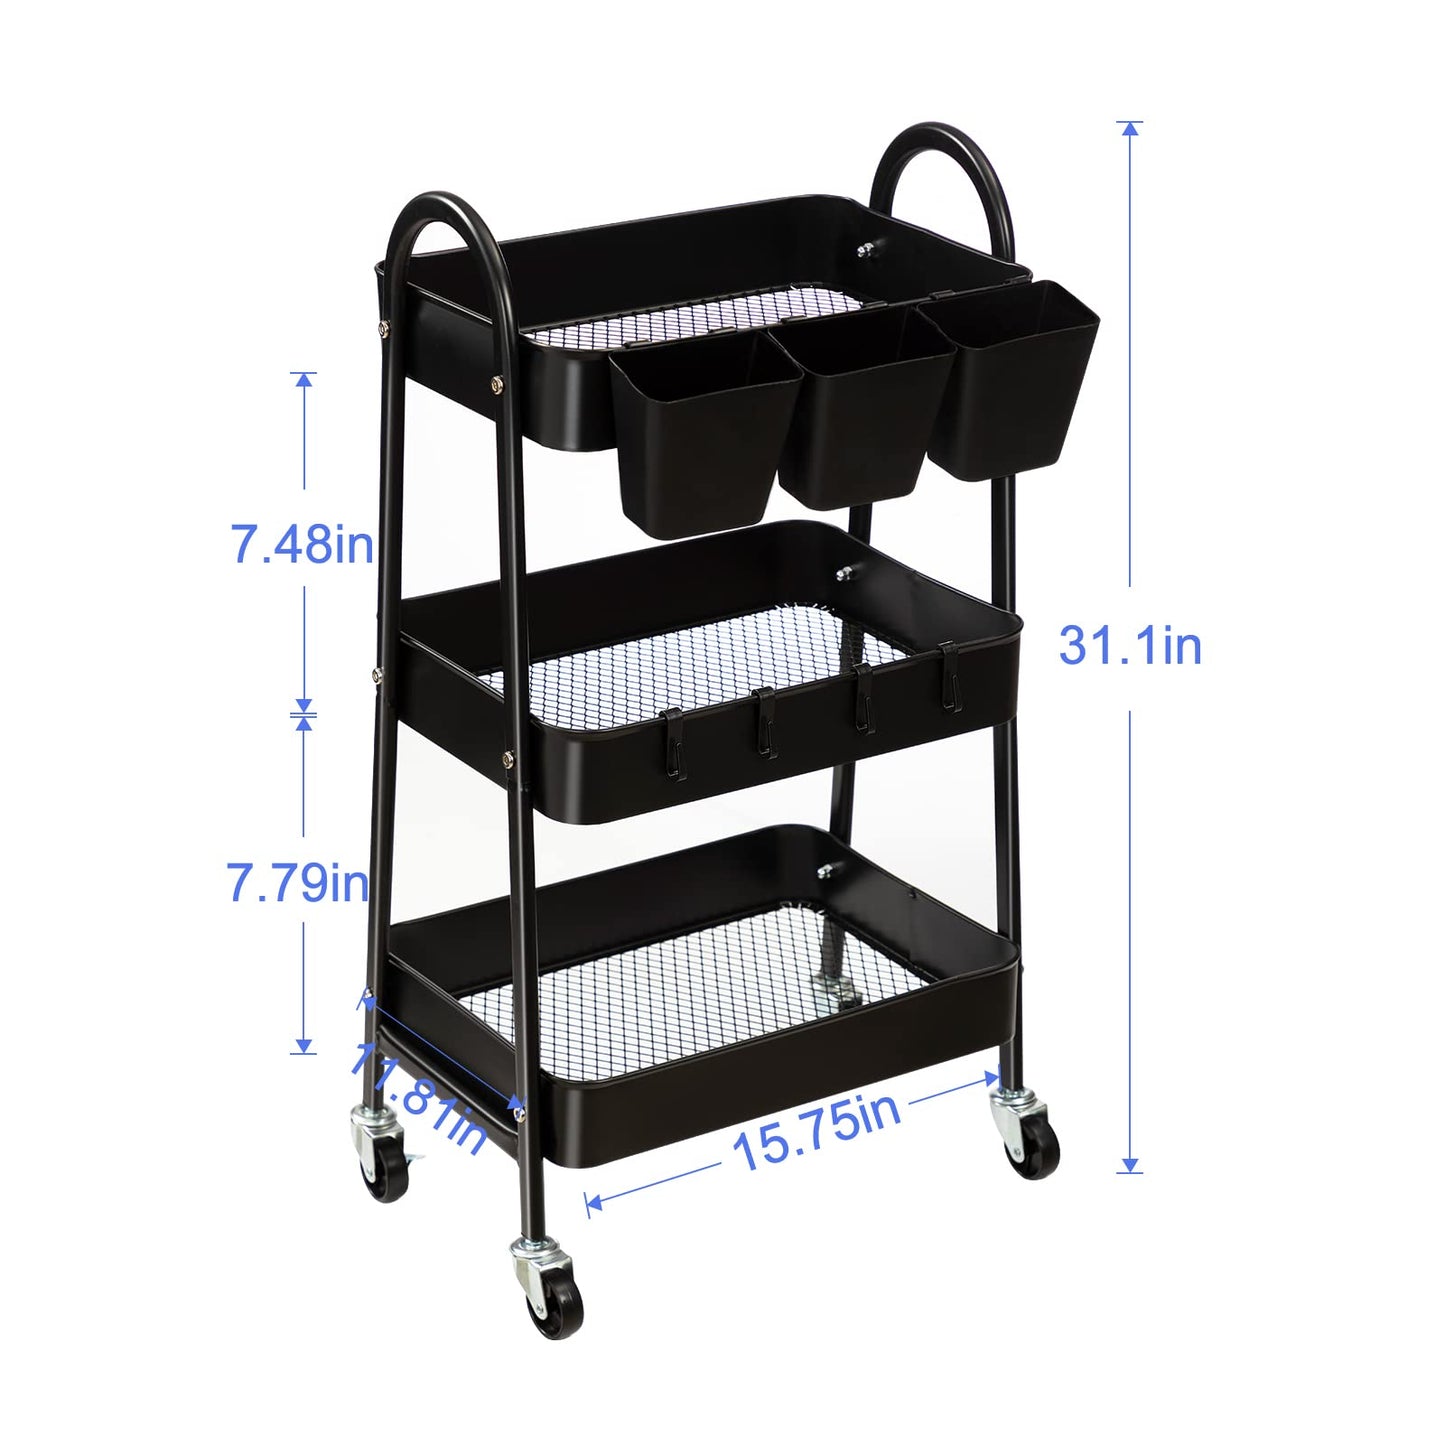 danpinera 3-Tier Rolling Cart, Metal Rolling Storage Cart with Lockable Wheels & Hanging Cups & Hooks, Mobile Trolley Cart for Kitchen, Bathroom,